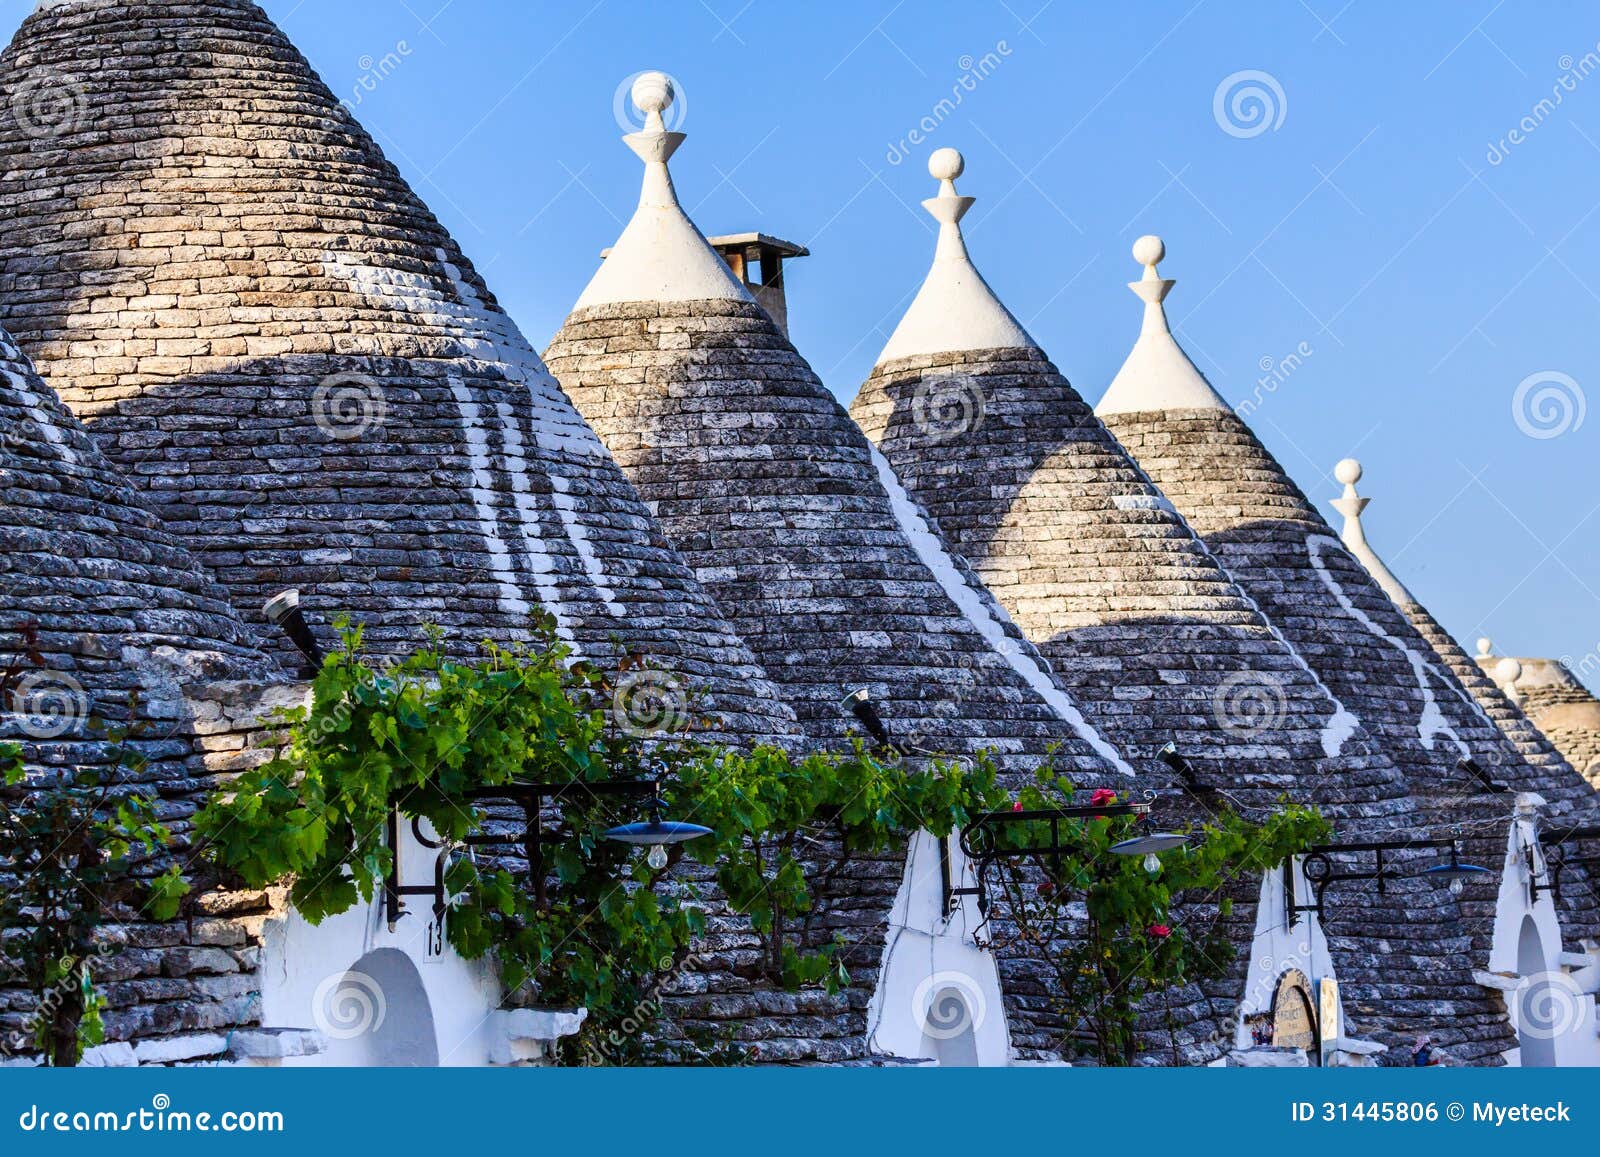 trulli roofs in alberobello, italy